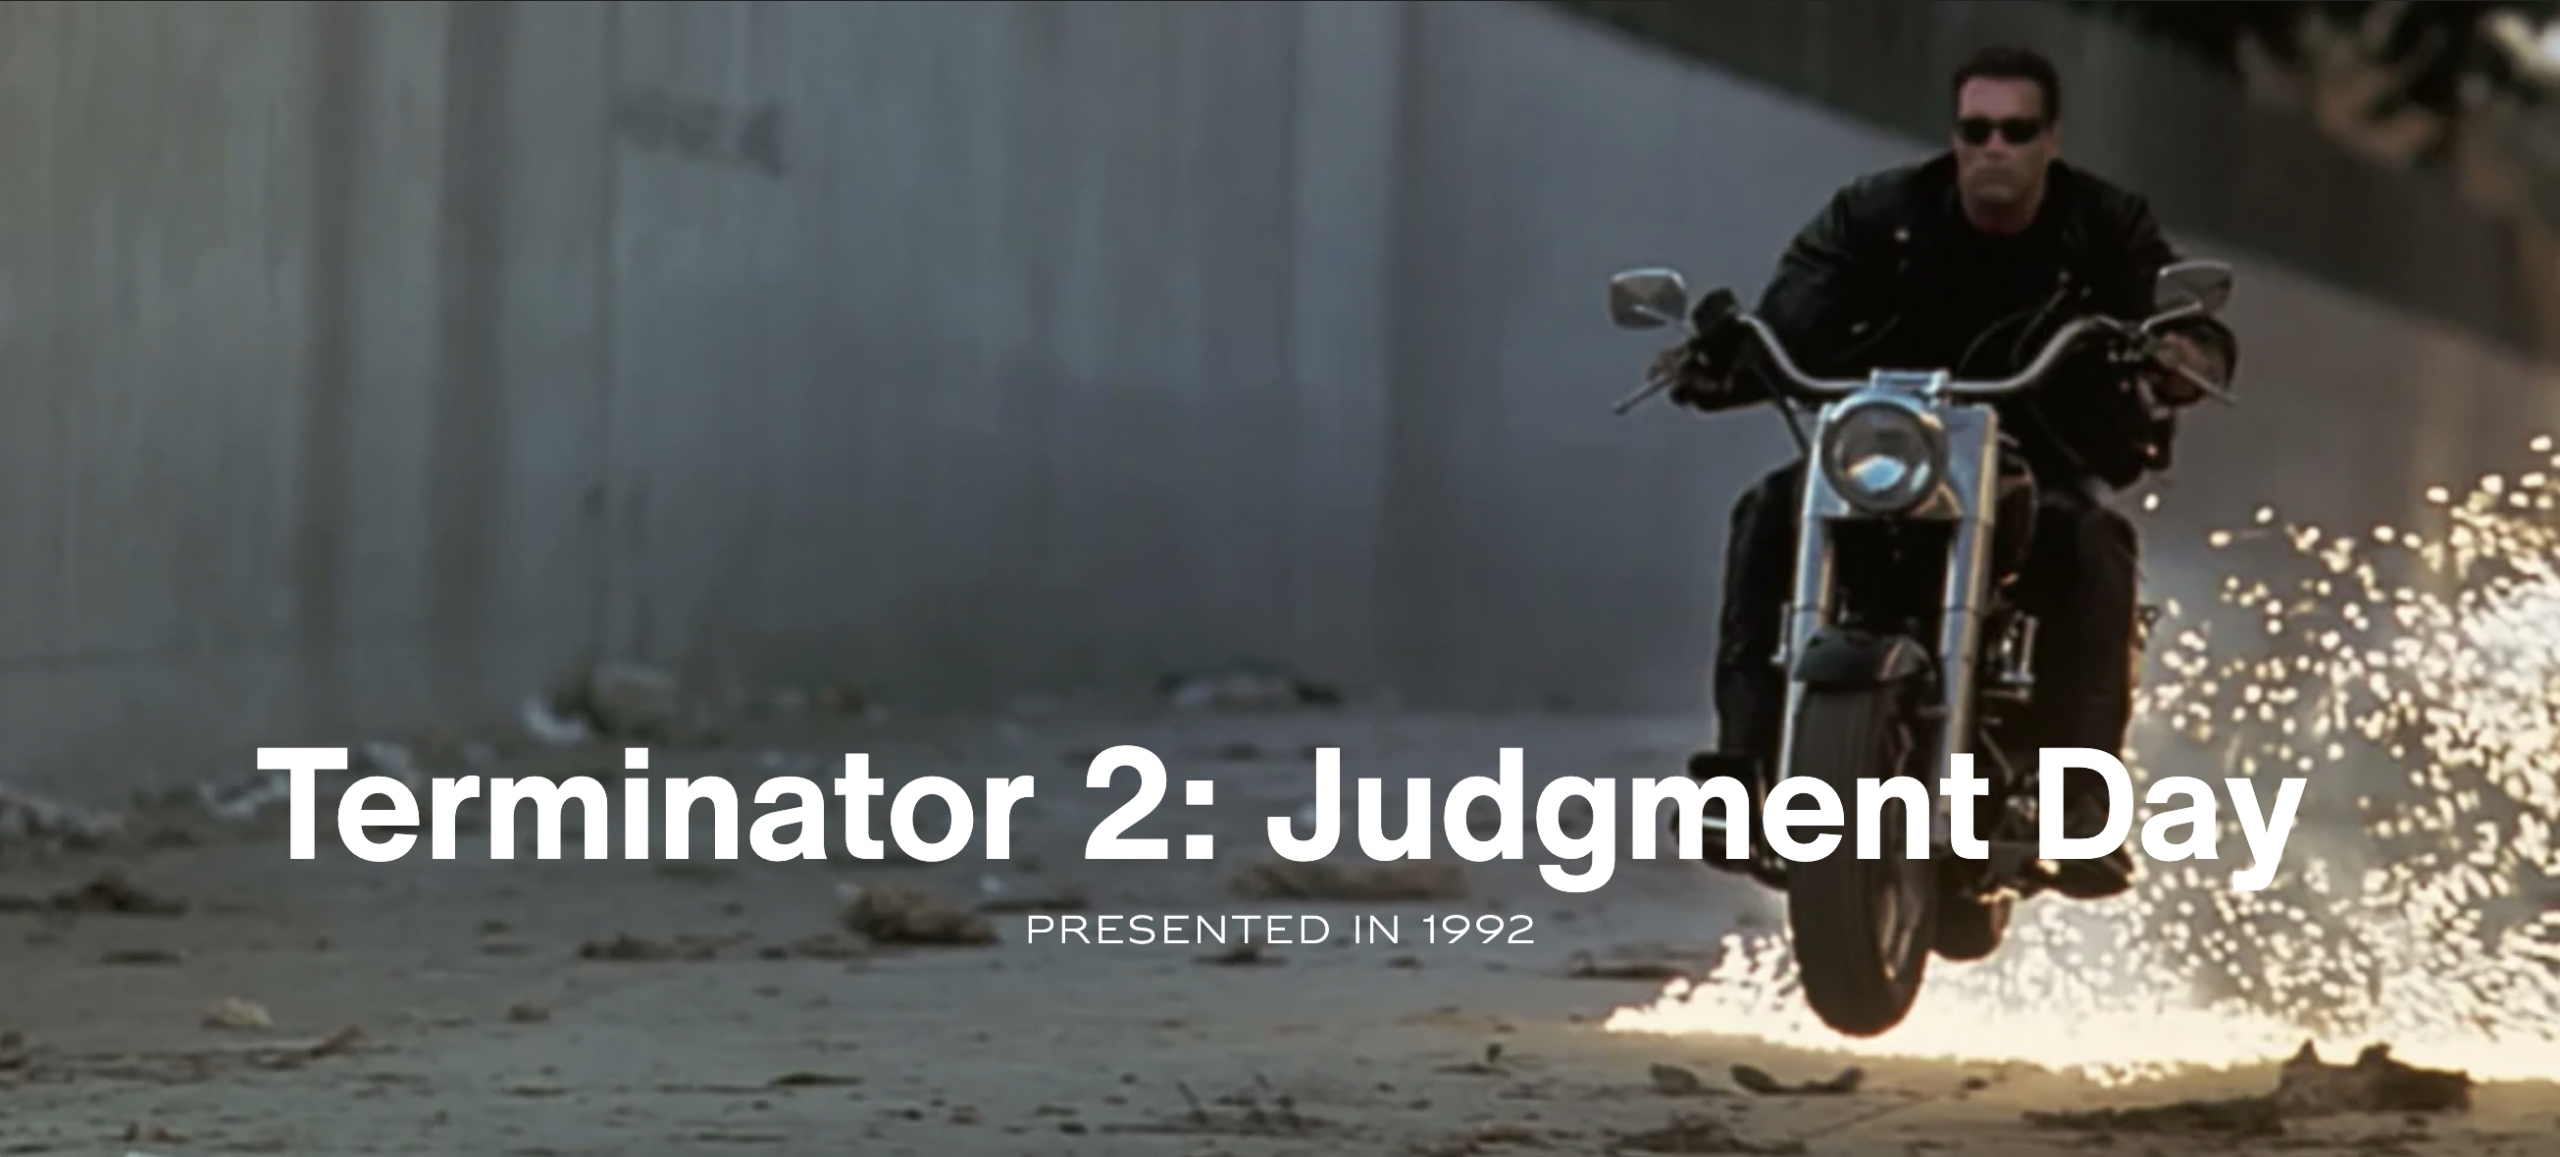 Terminator 2 Judgement Day Screenshot